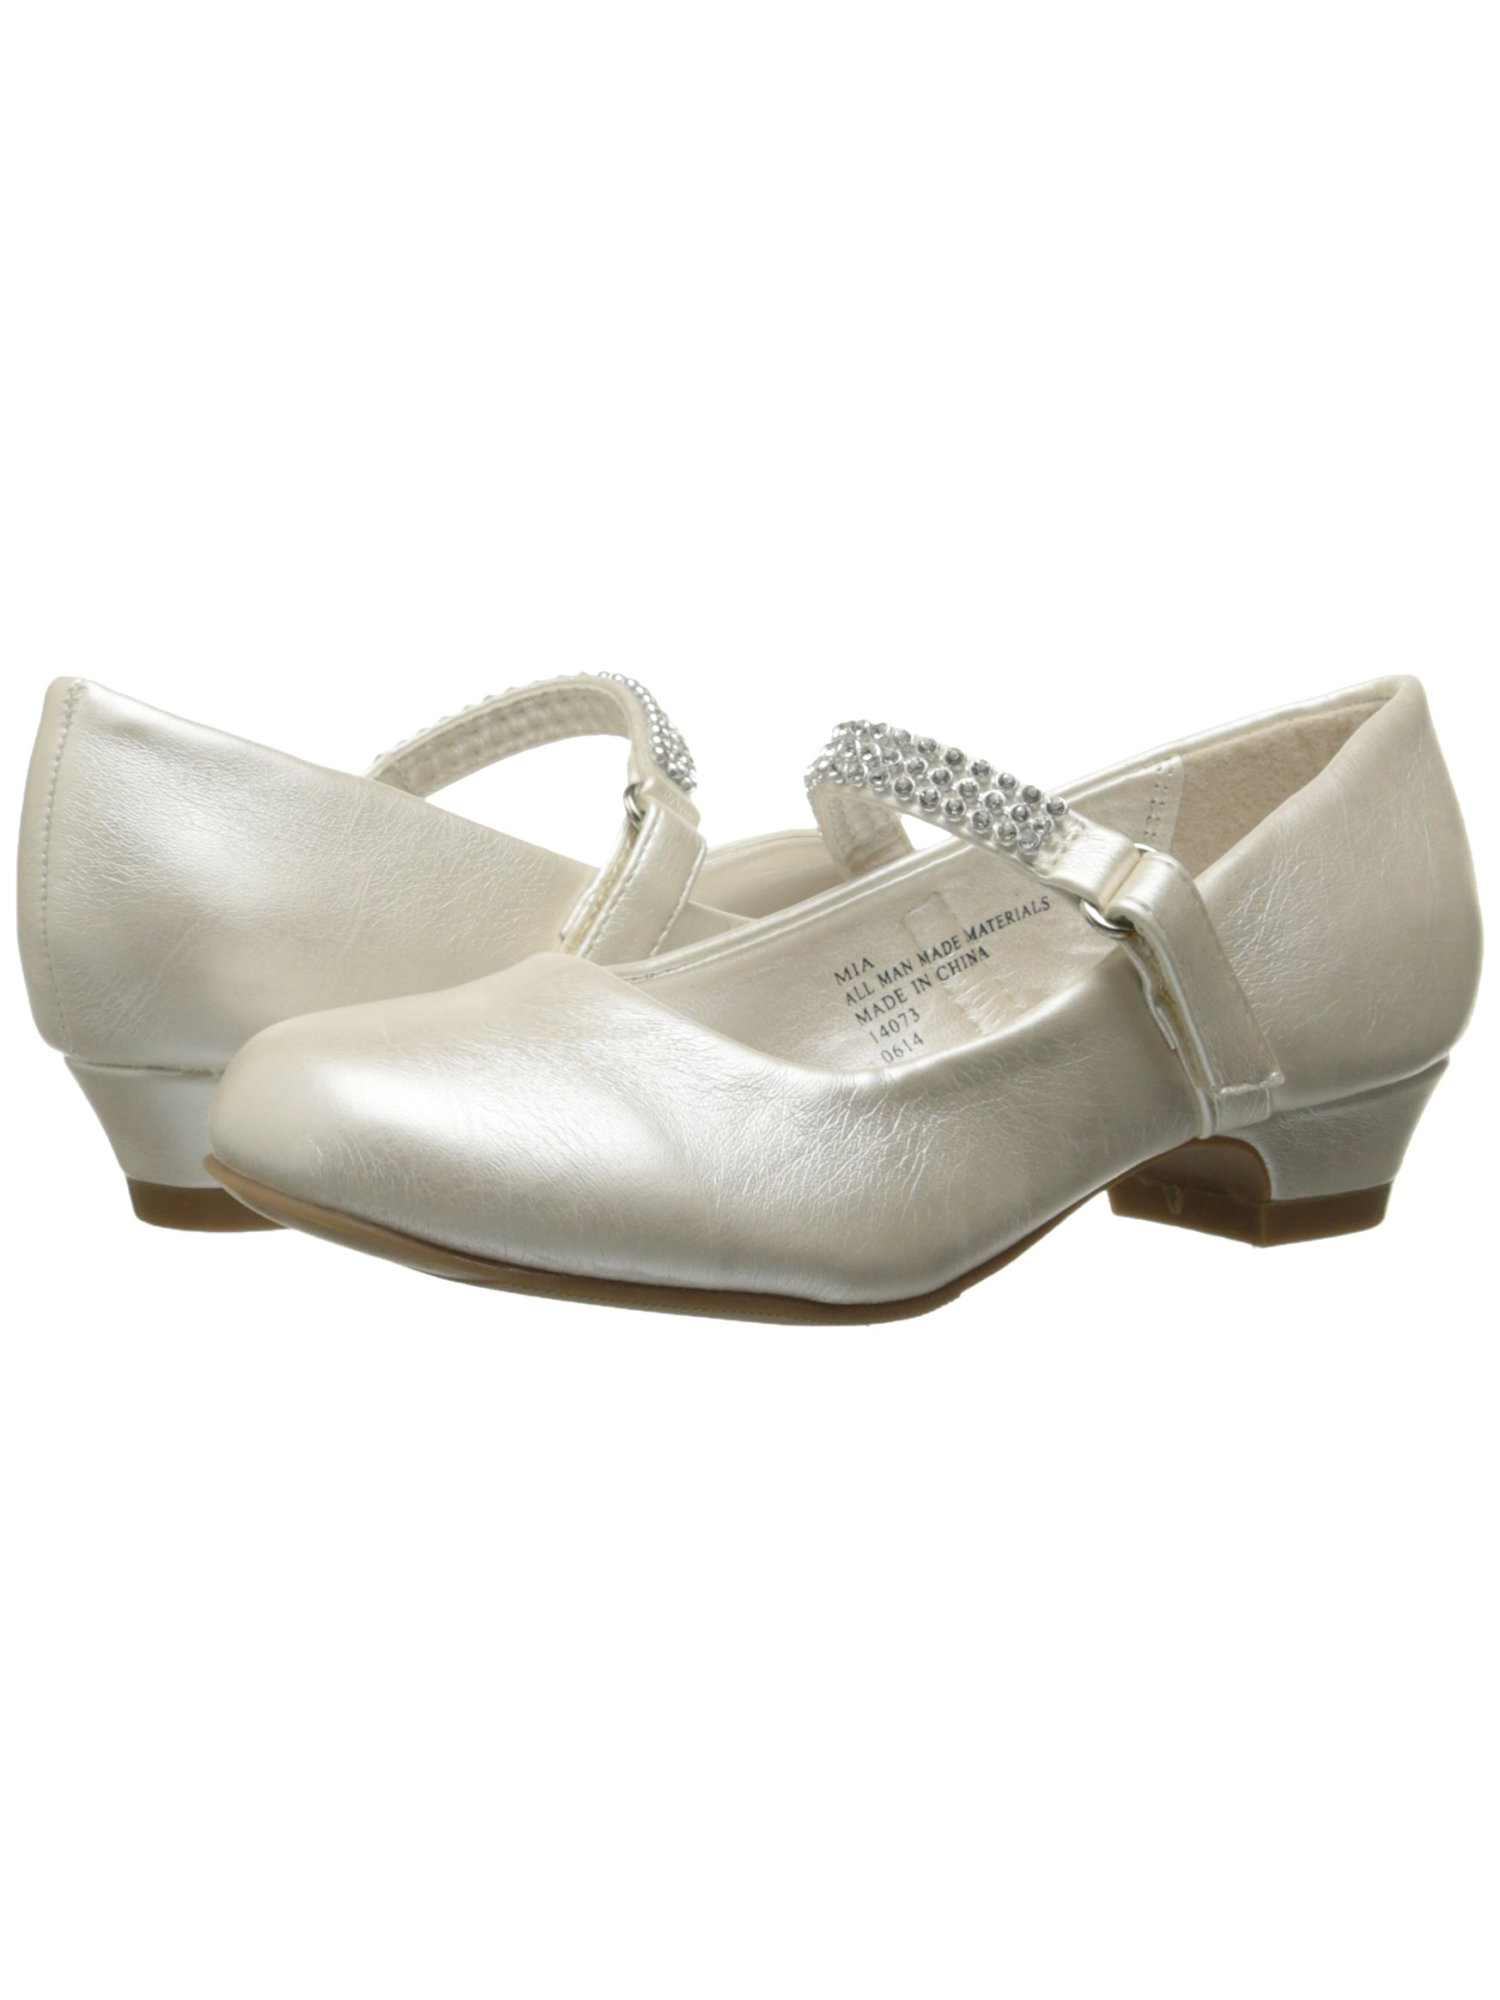 Girls Low Heel Dress Shoe With Rhinestone Strap (5, White)